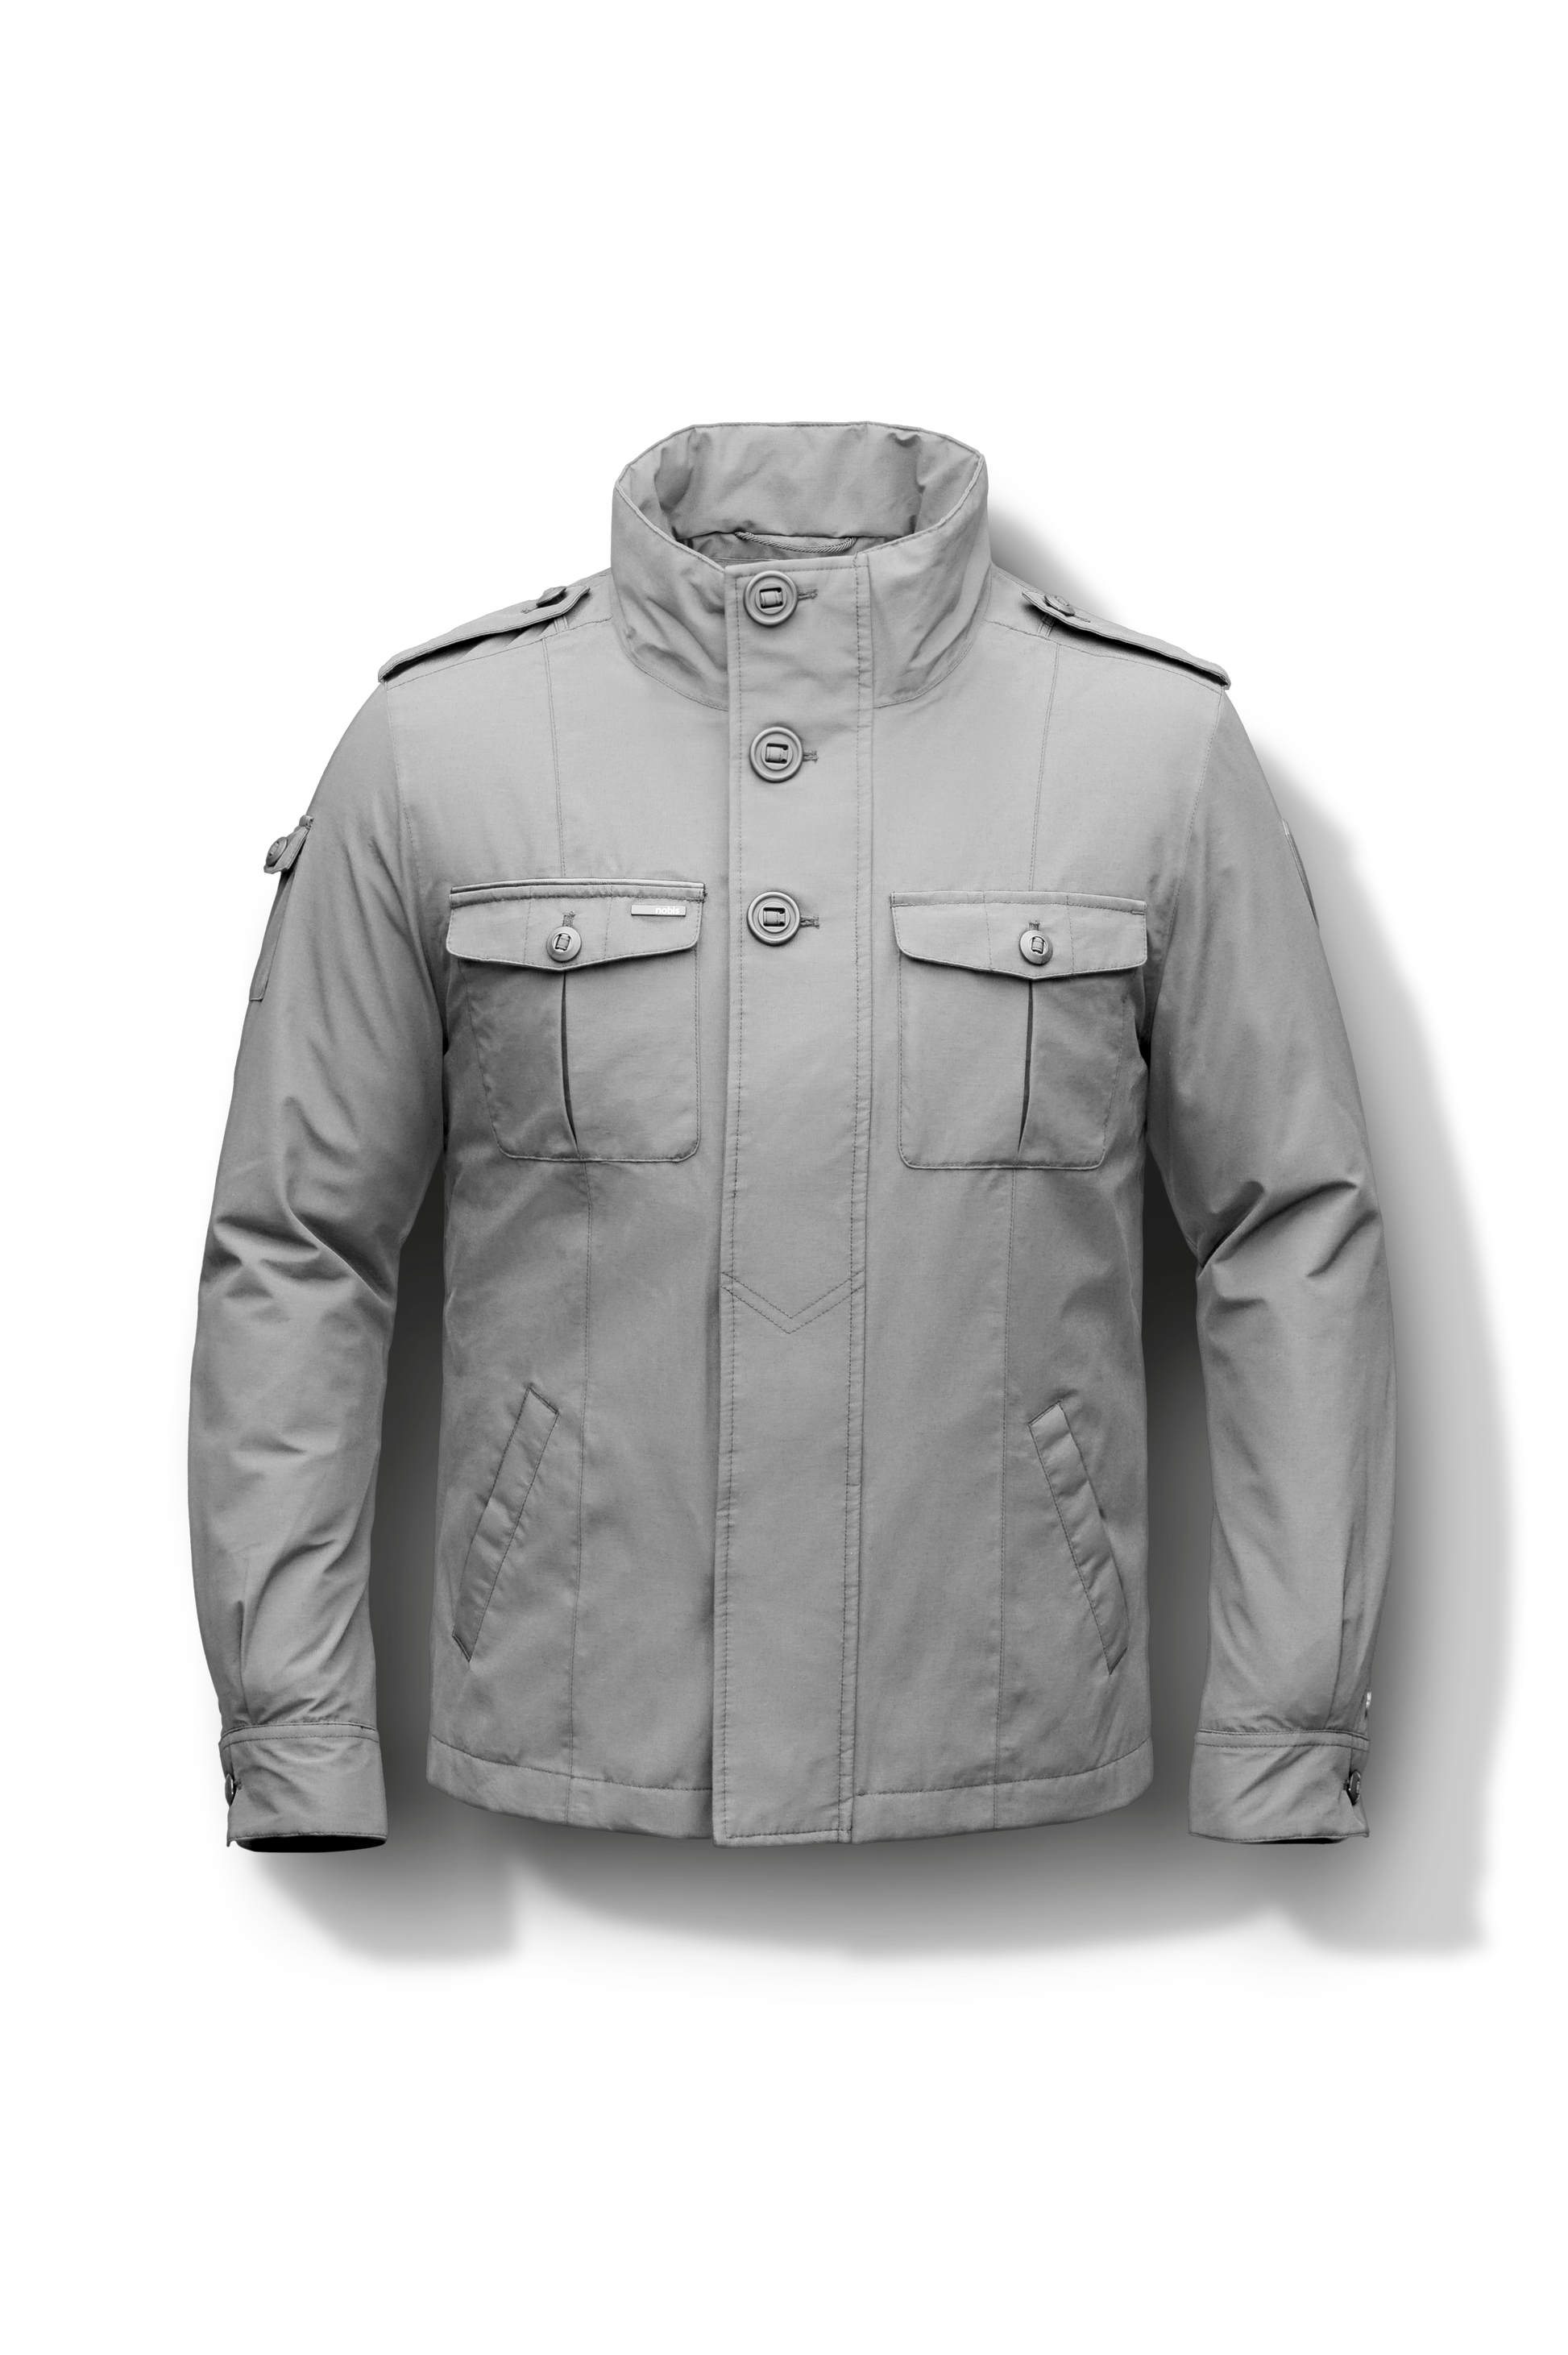 Men's waist length military style jacket in Light Grey